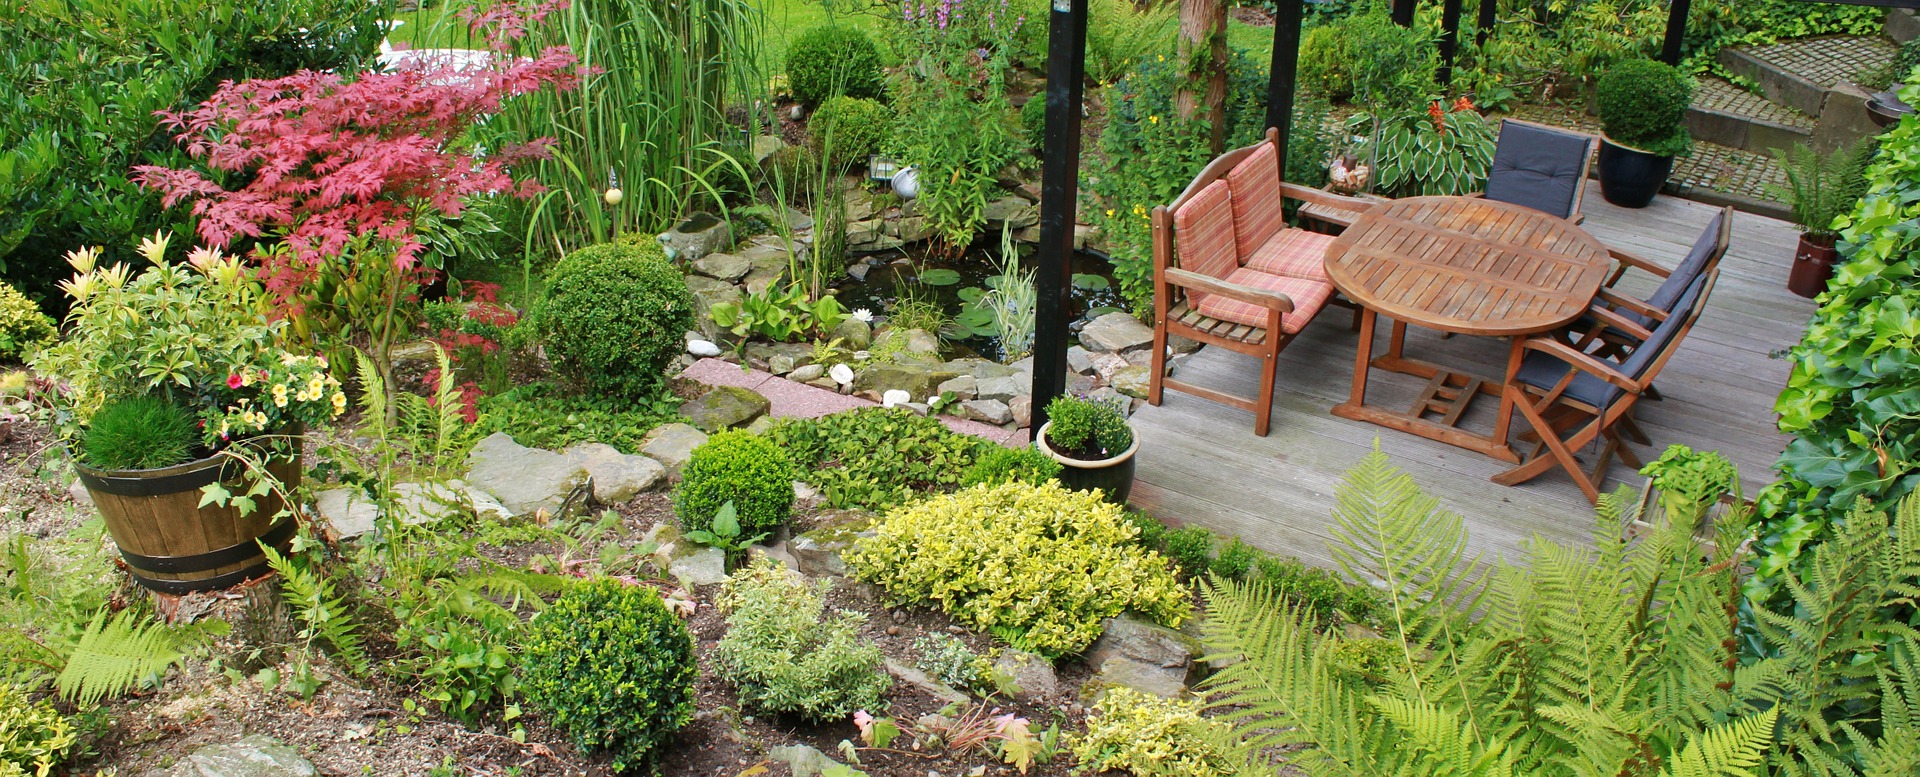 टेरेस गार्डन डिजाइन – Terrace Garden Design